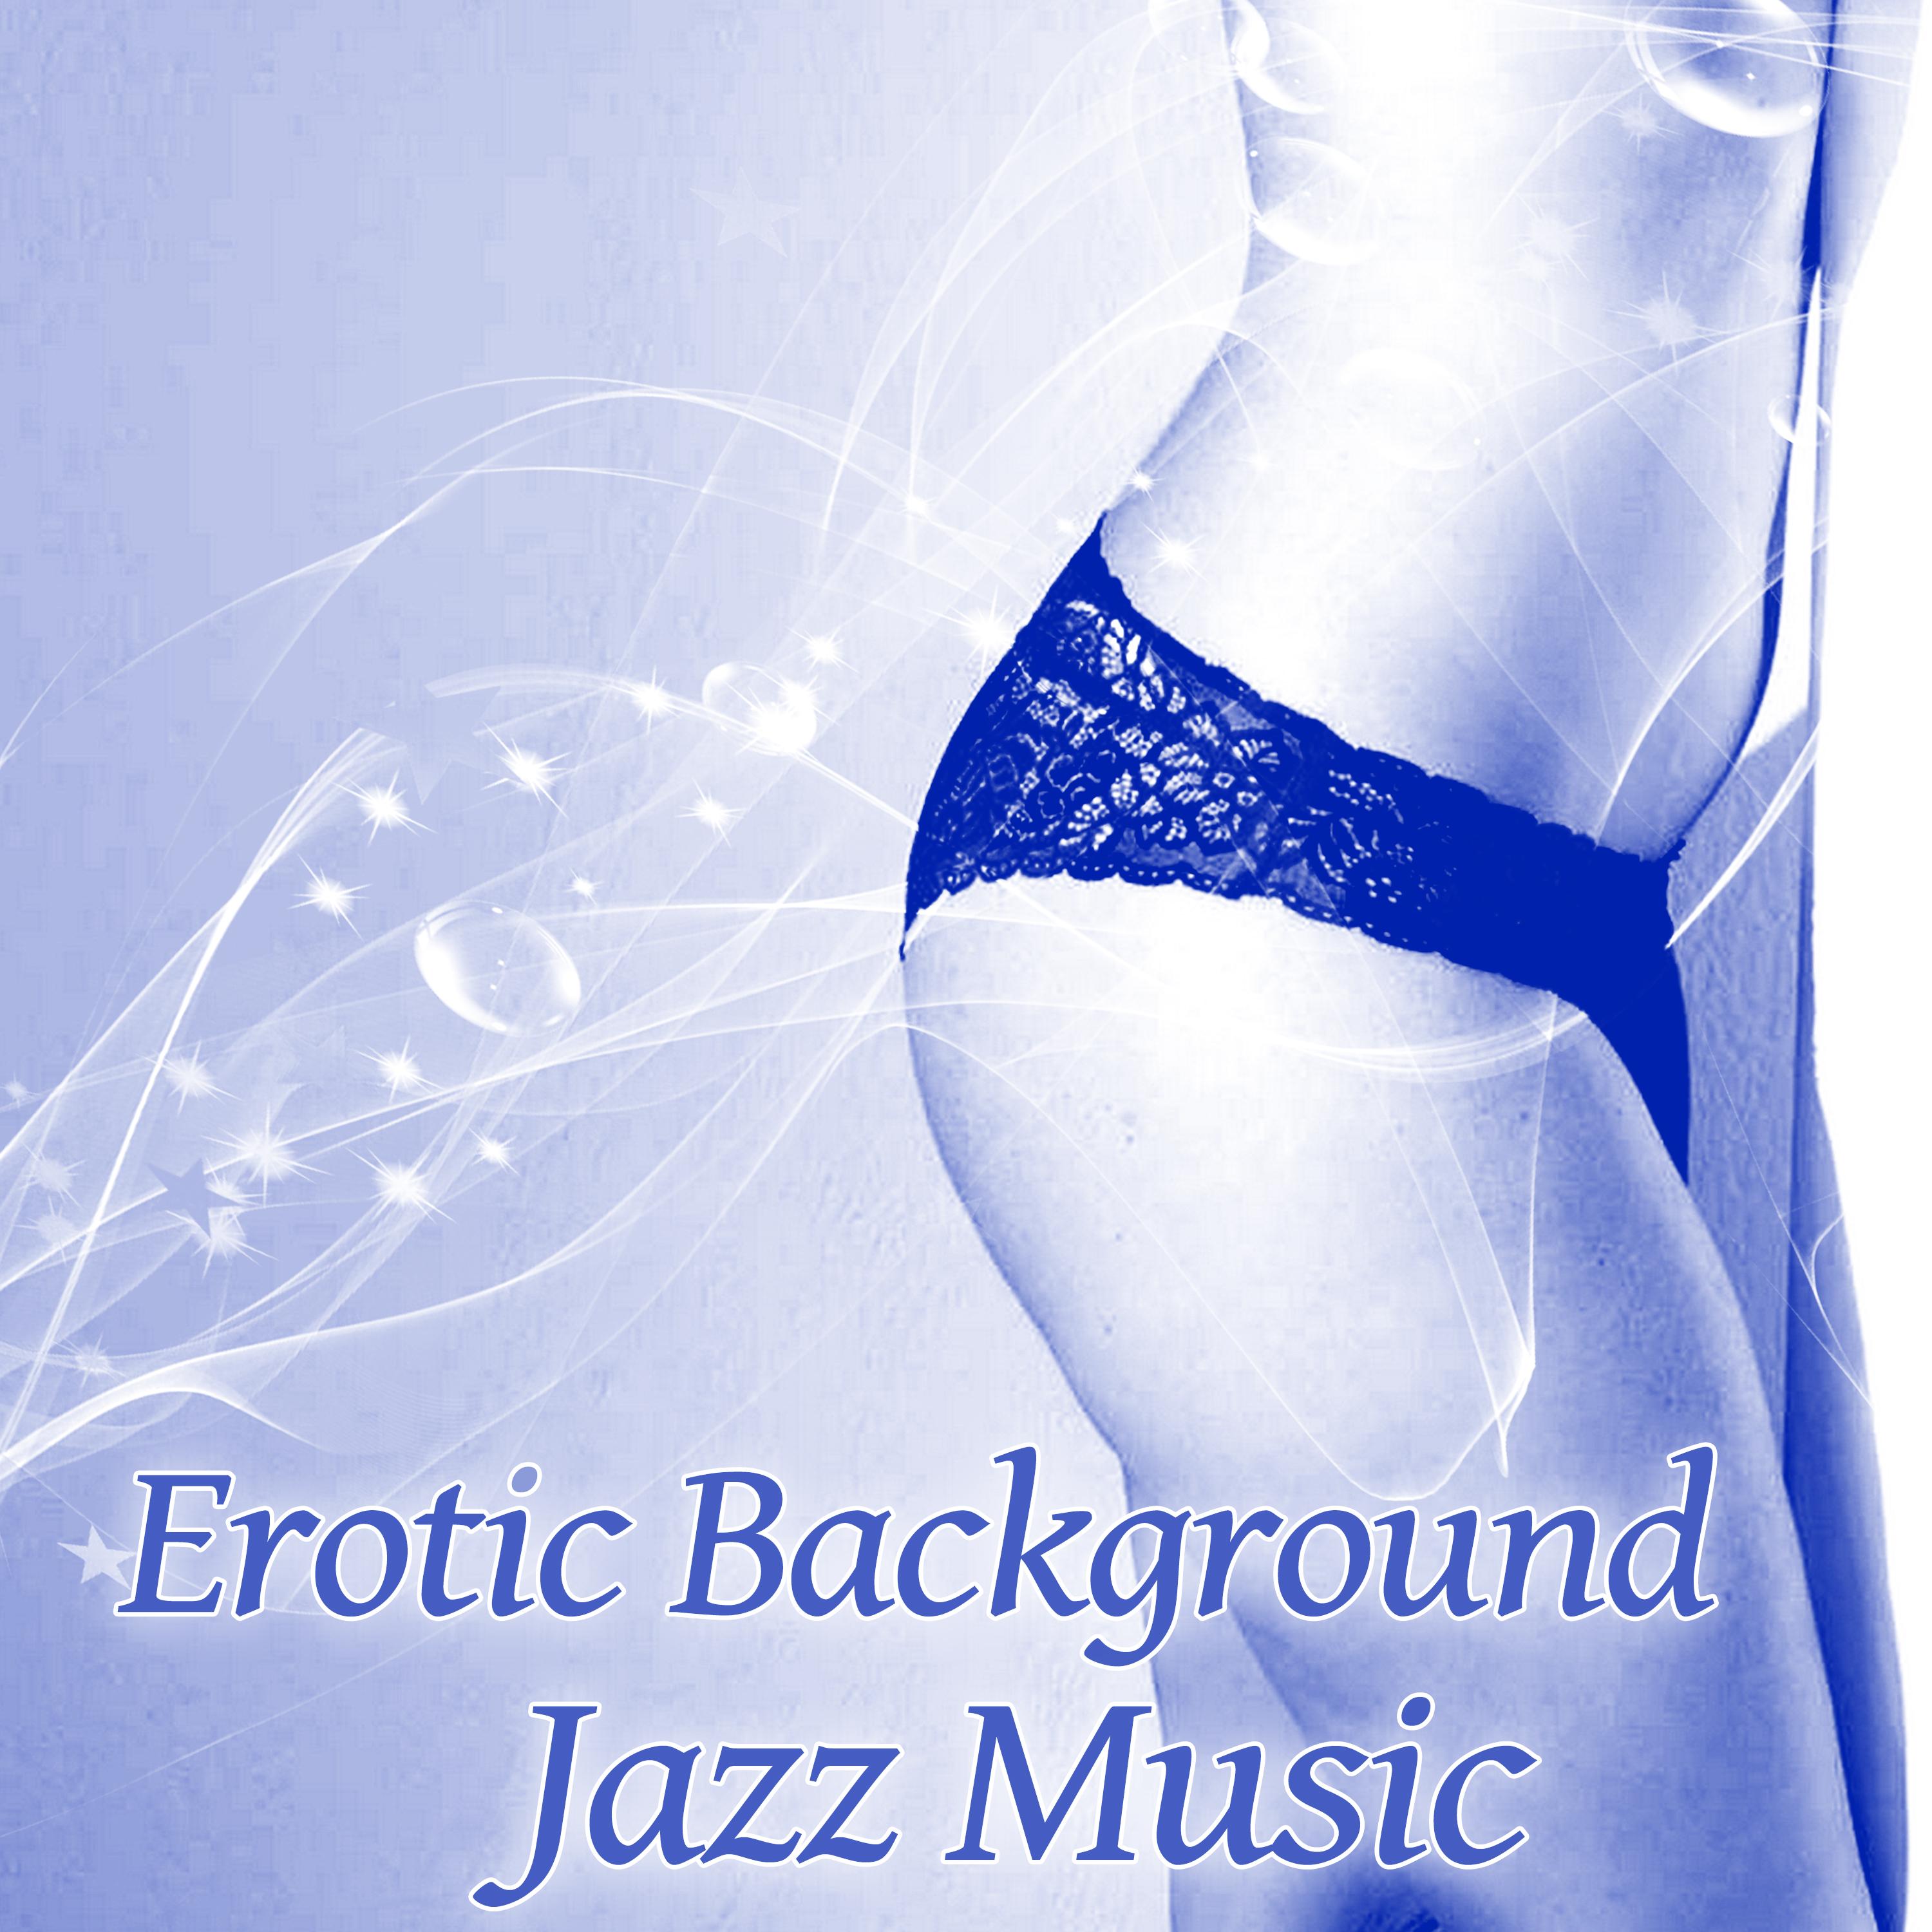 Erotic Background Jazz Music – Slow Jazz Music, Erotic Dance Moves, Shades of Jazz, Calm Piano Bar